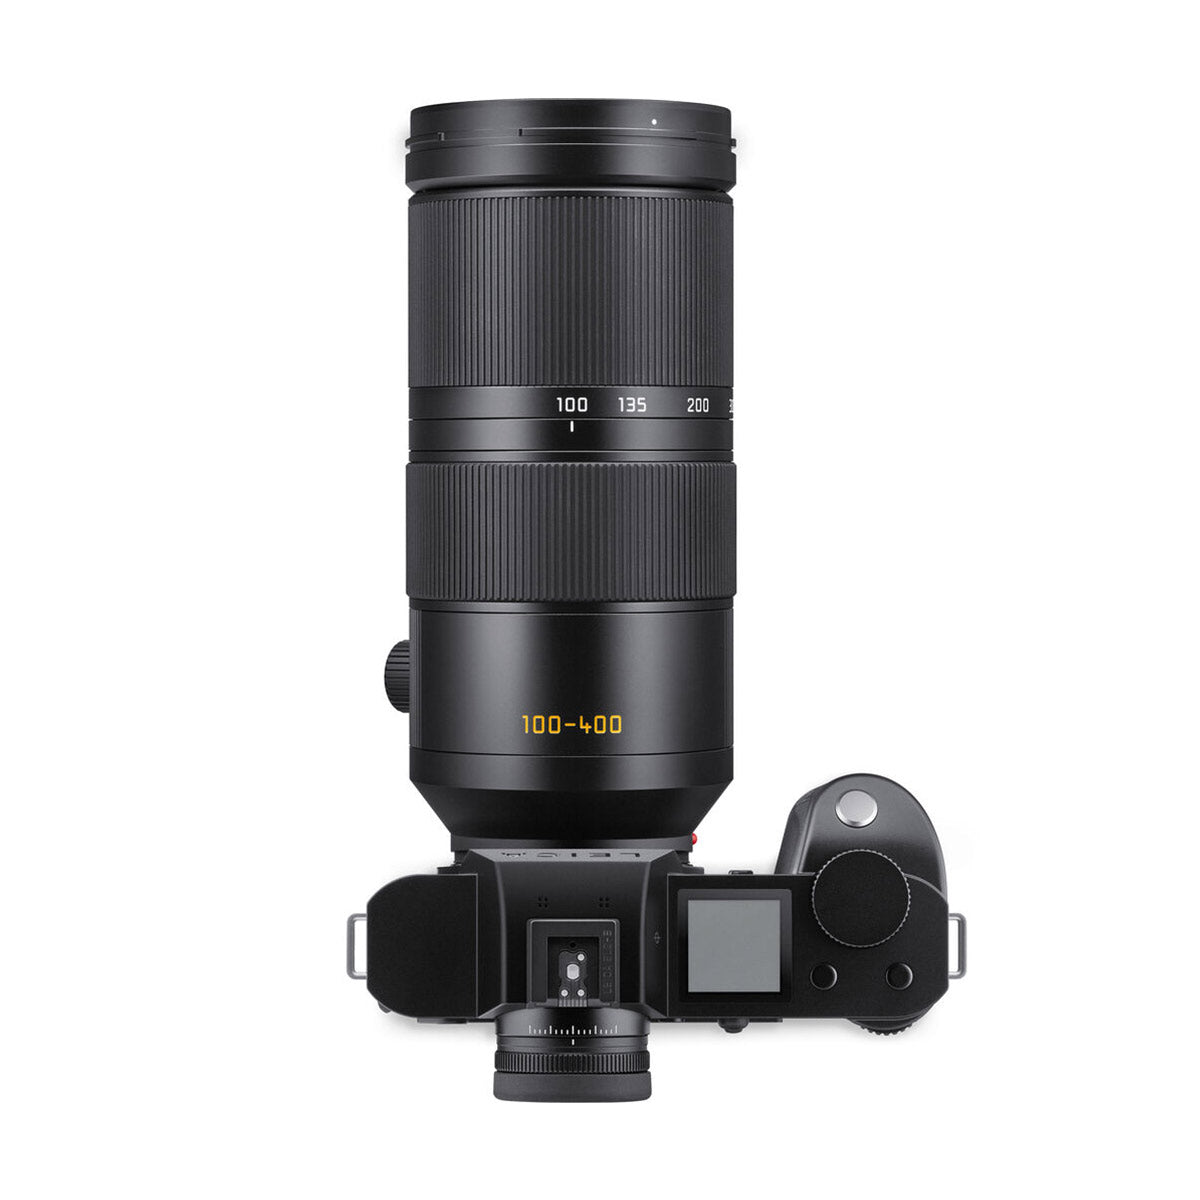 Leica 100-400mm f/5-6.3 Vario-Elmar-SL Lens